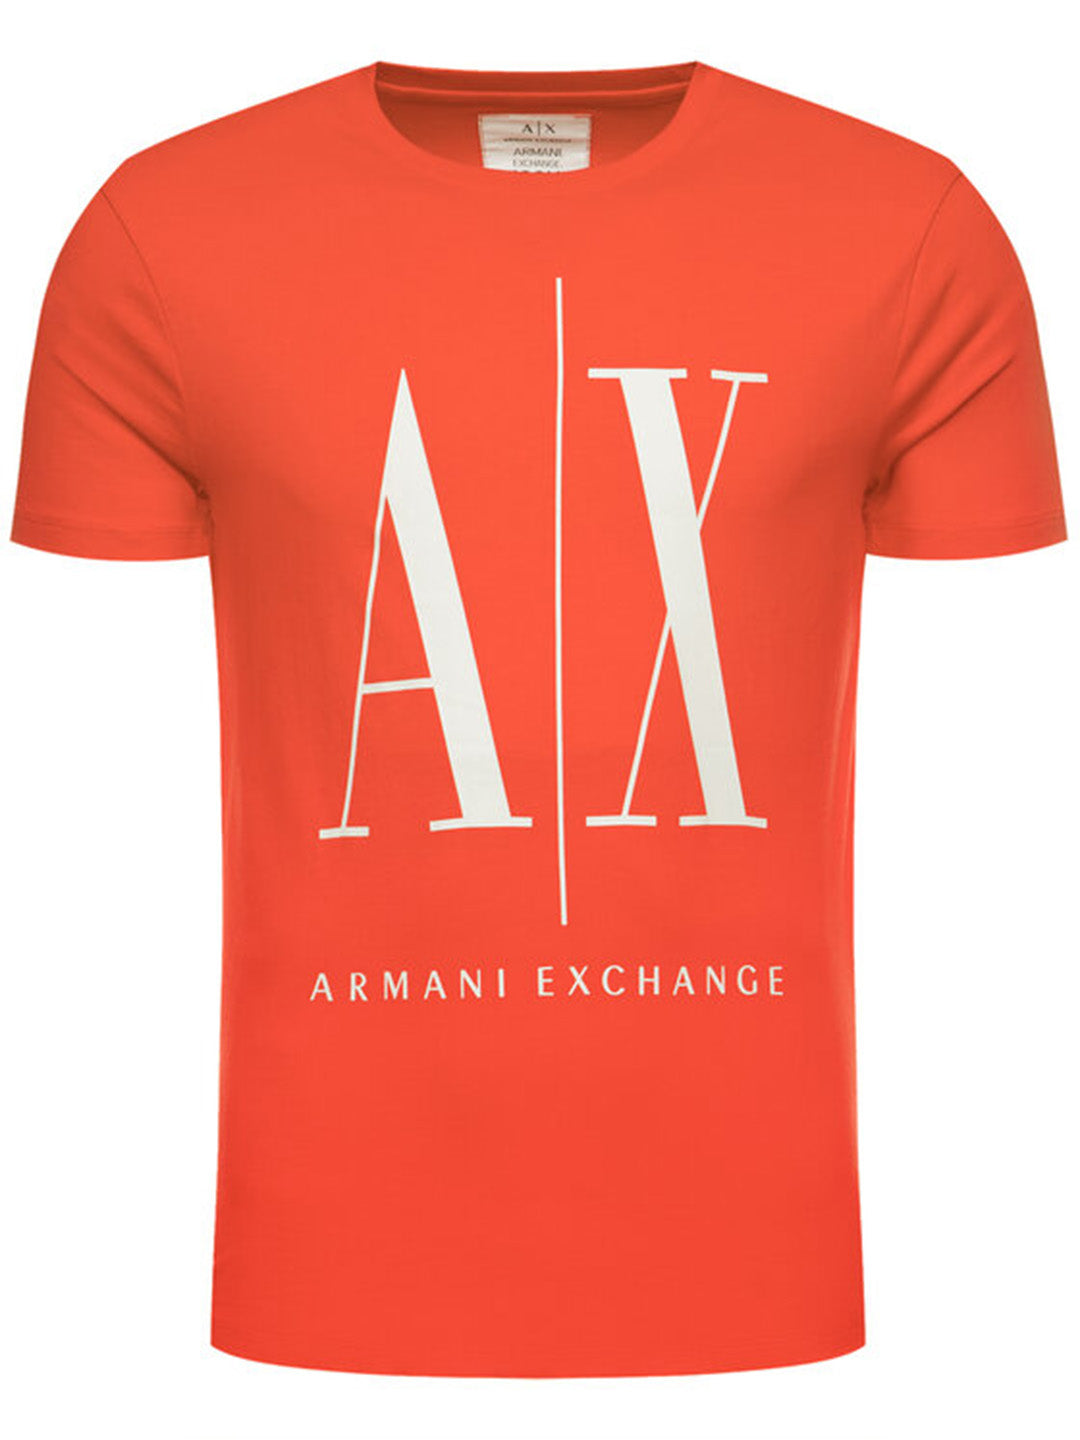 Buy Cotton Armani Exchange Tshirt for Men - White